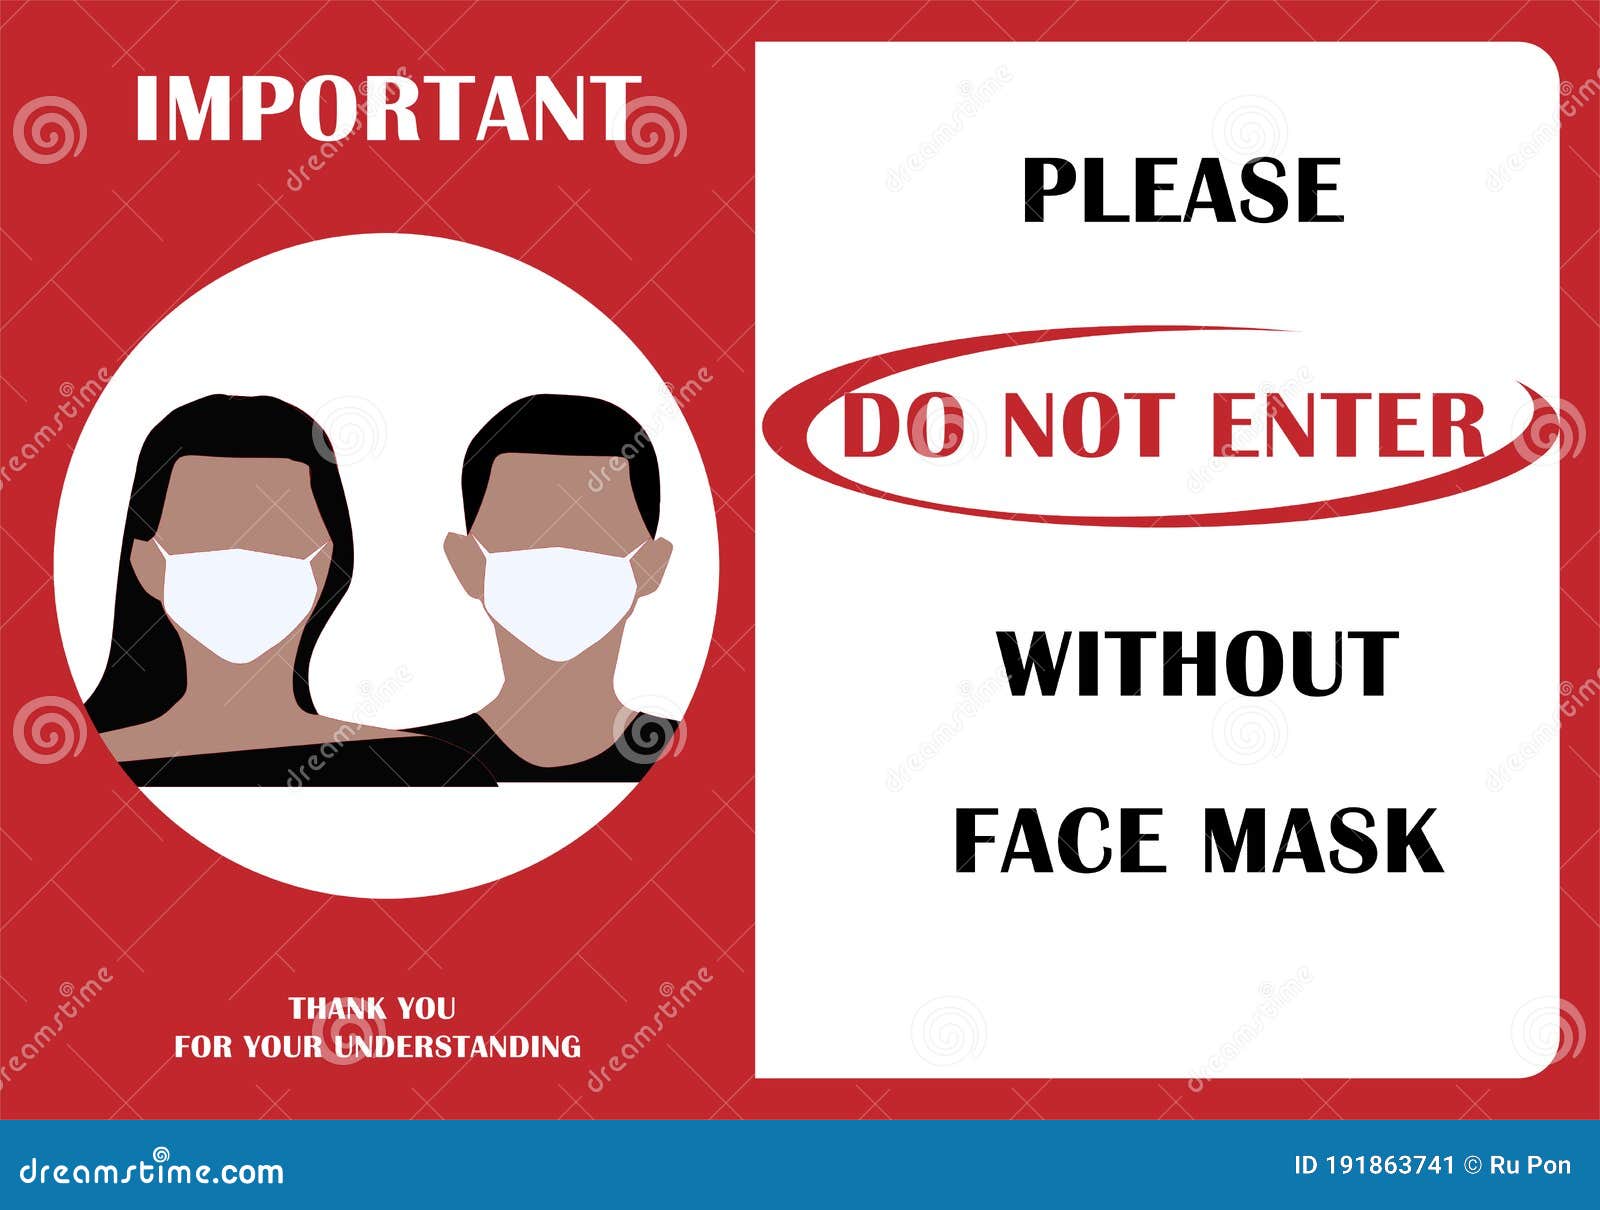 Wear Mask Sign Vector Mask Sign And Notice Safety Notice For Wearing Mask Please Wear Face Mask Stock Illustration Illustration Of Mandatory Mask